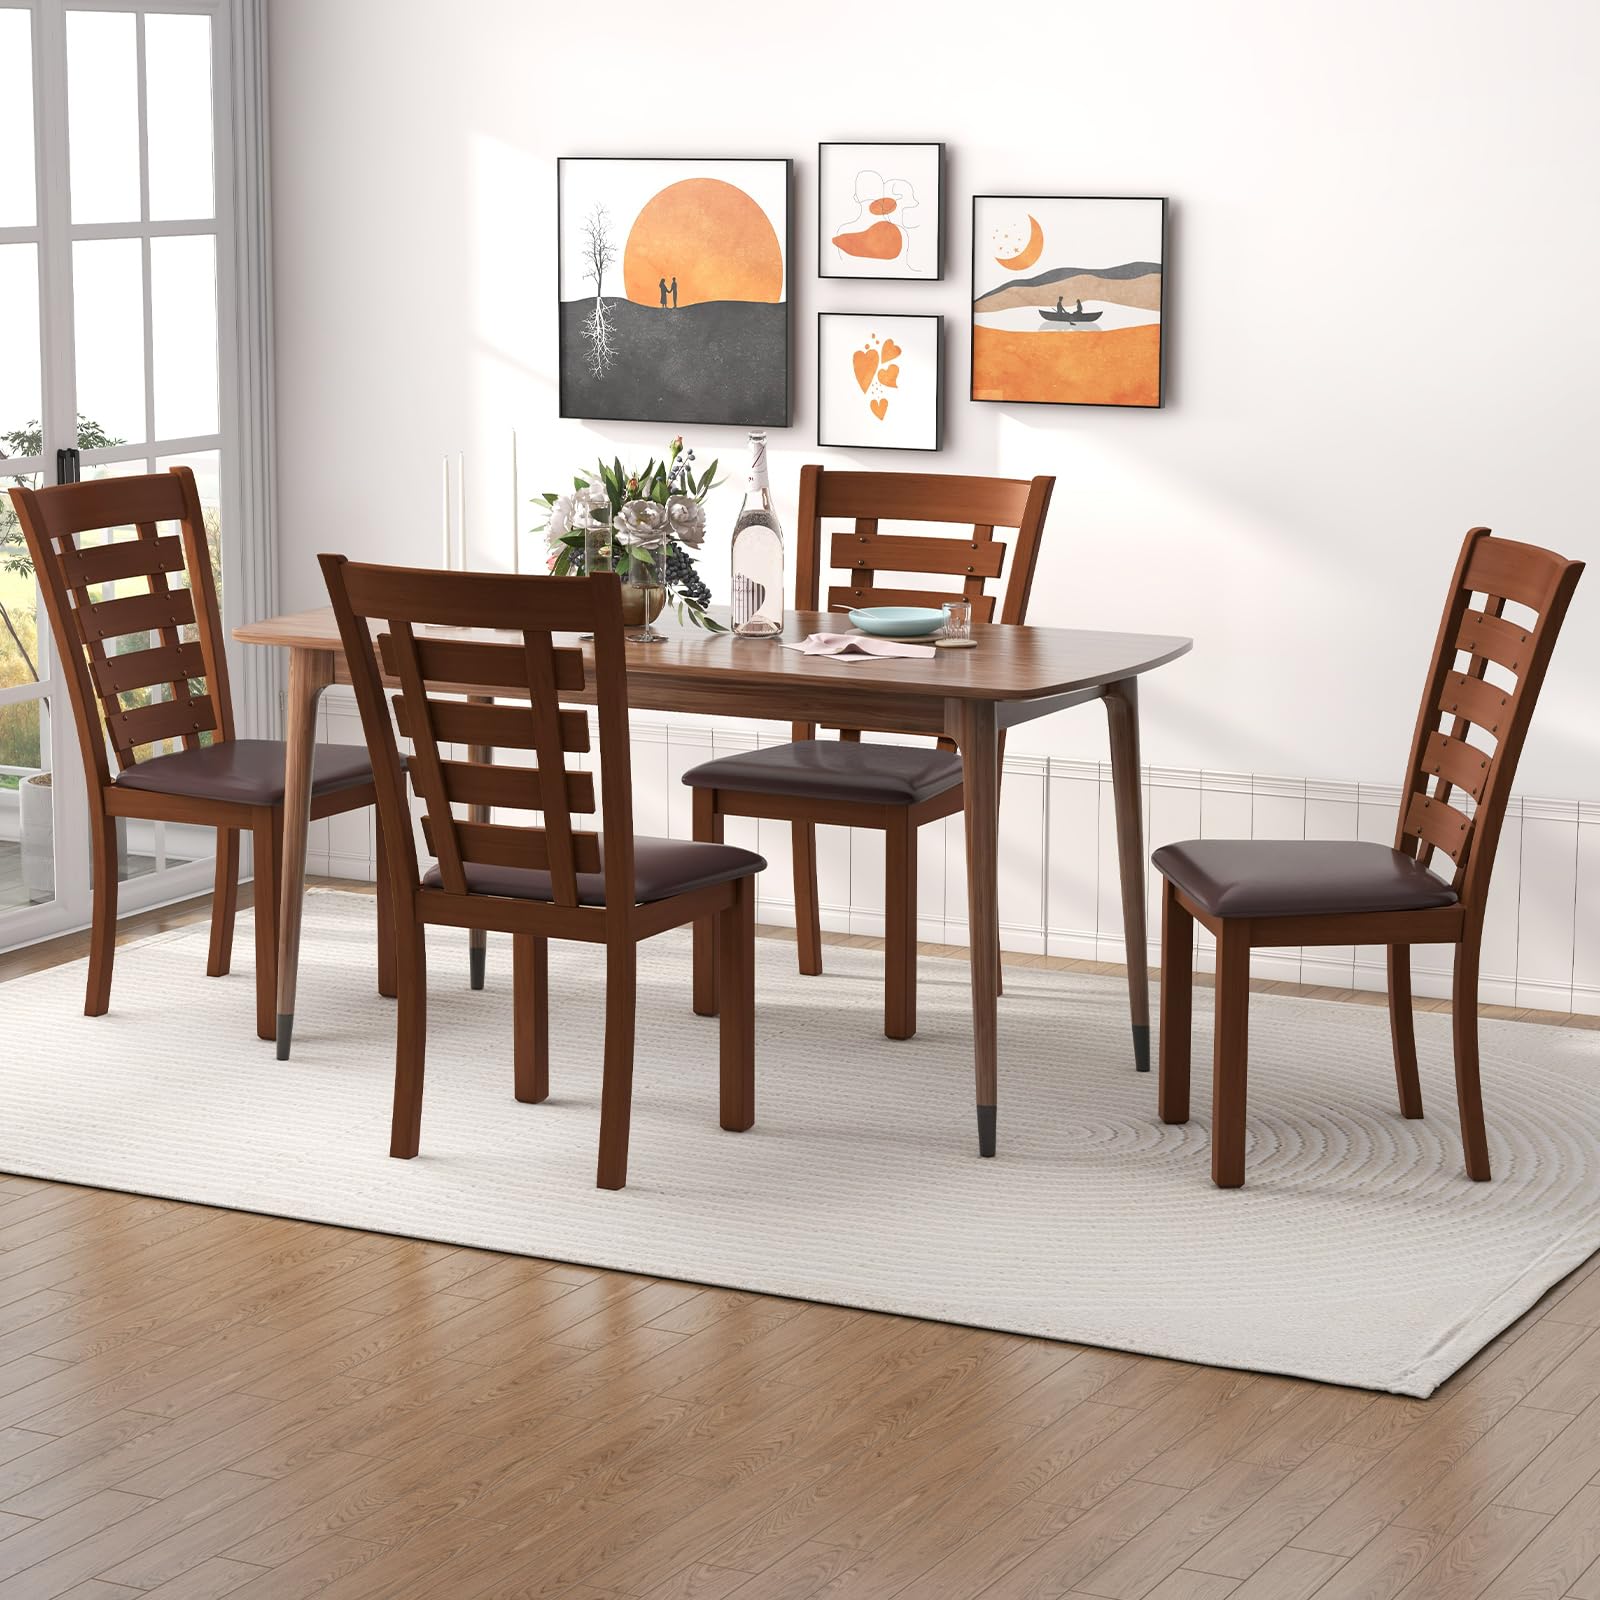 Giantex Wood Dining Chairs Set